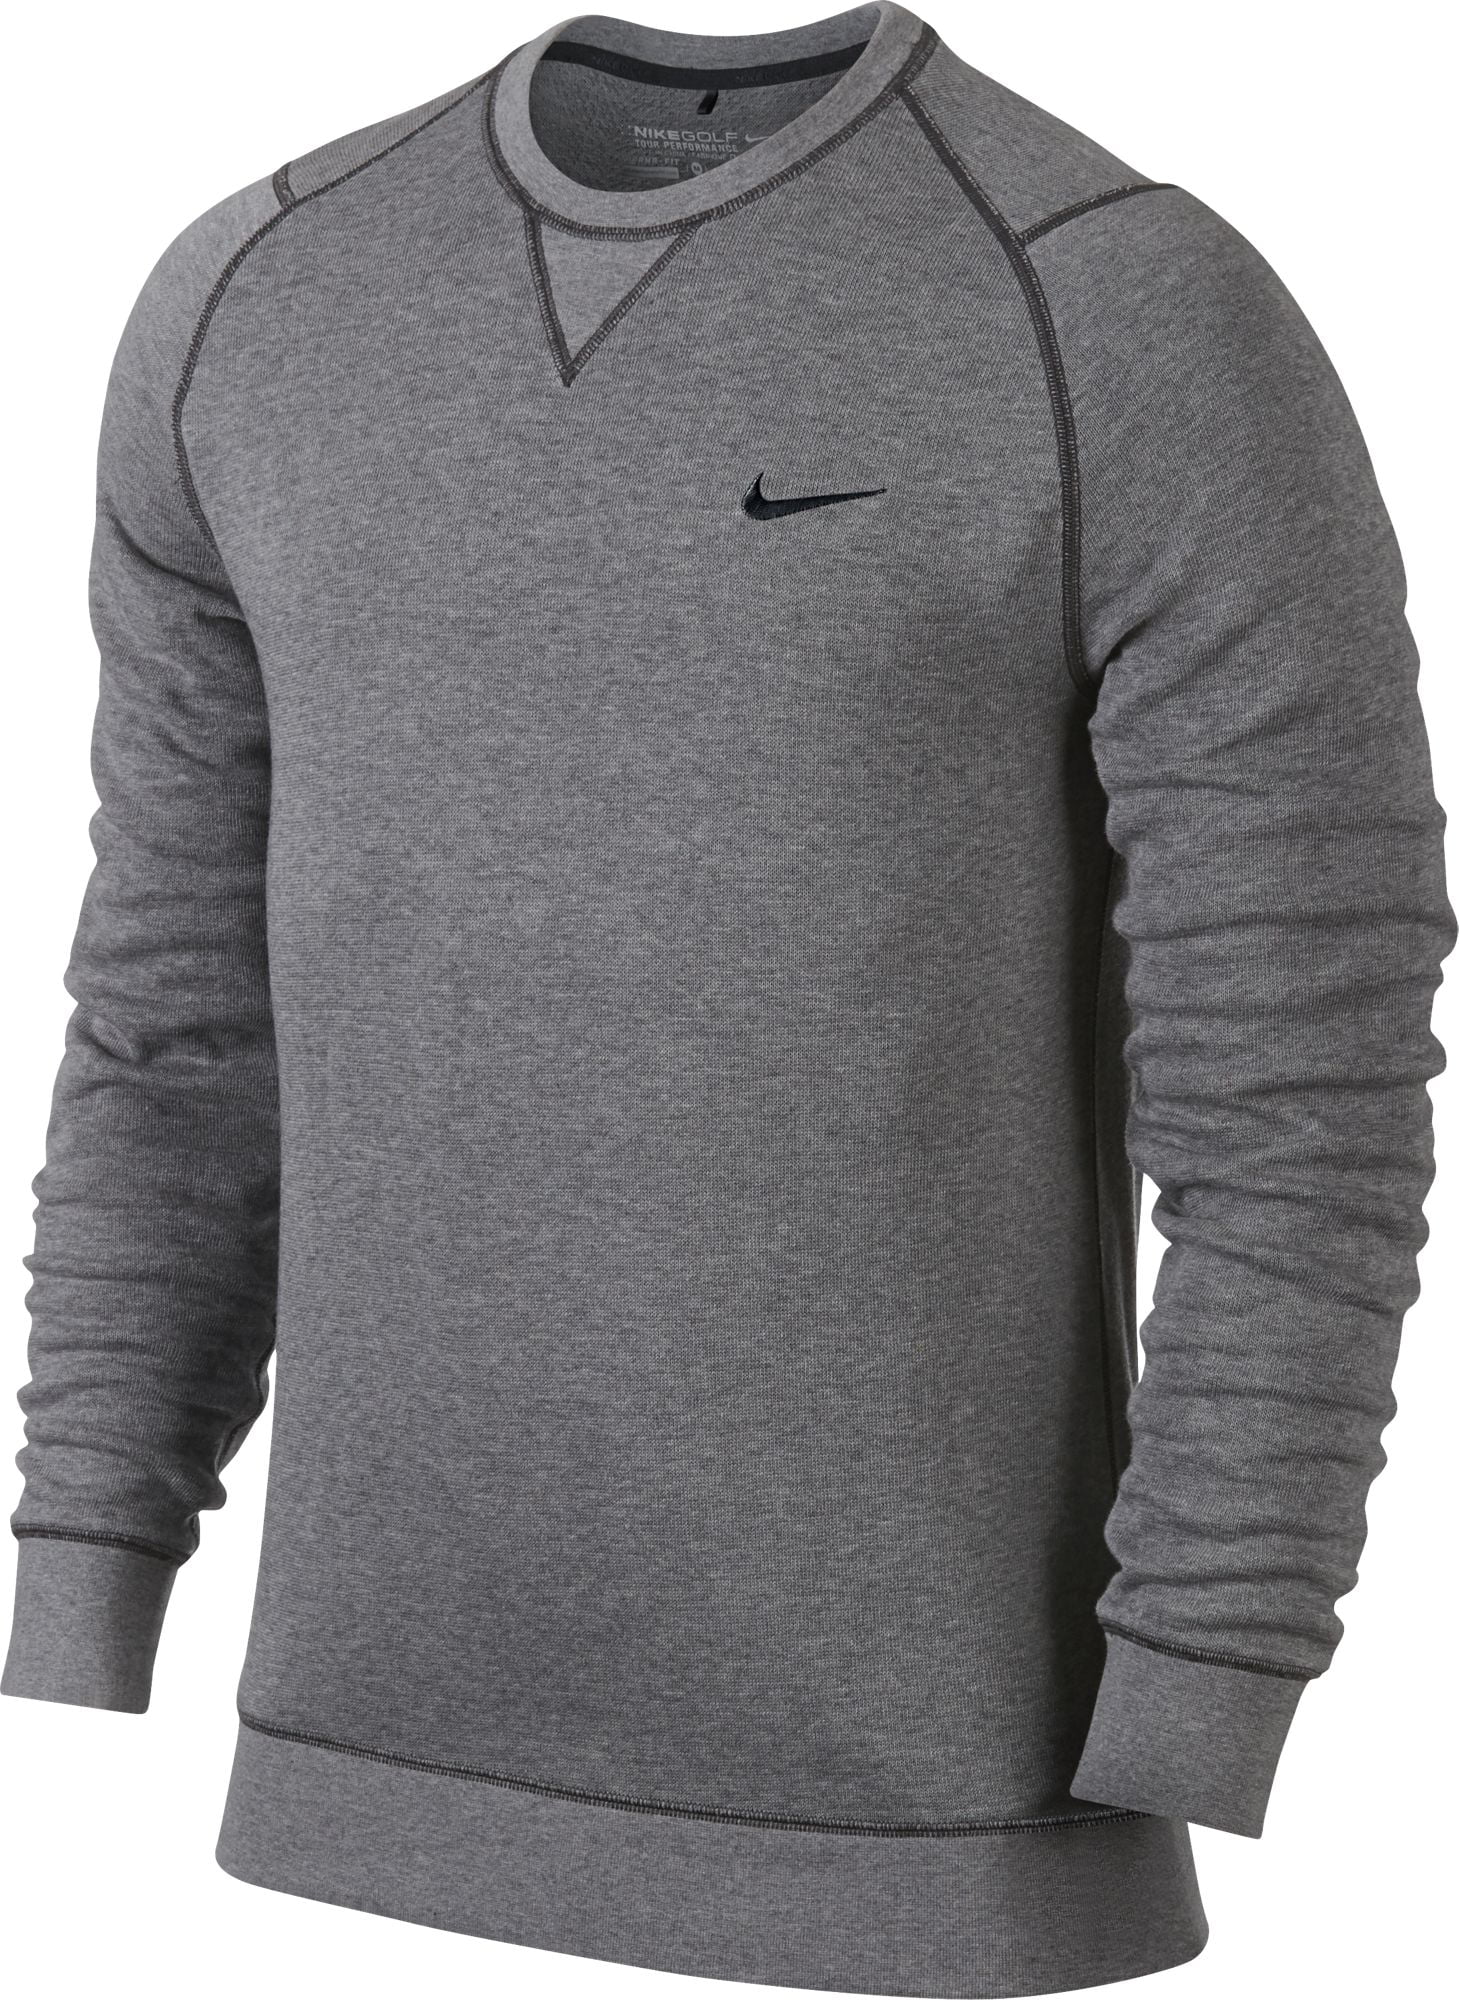 Nike 2017 Range Sweater Crew (Carbon Heather) - Walmart.com